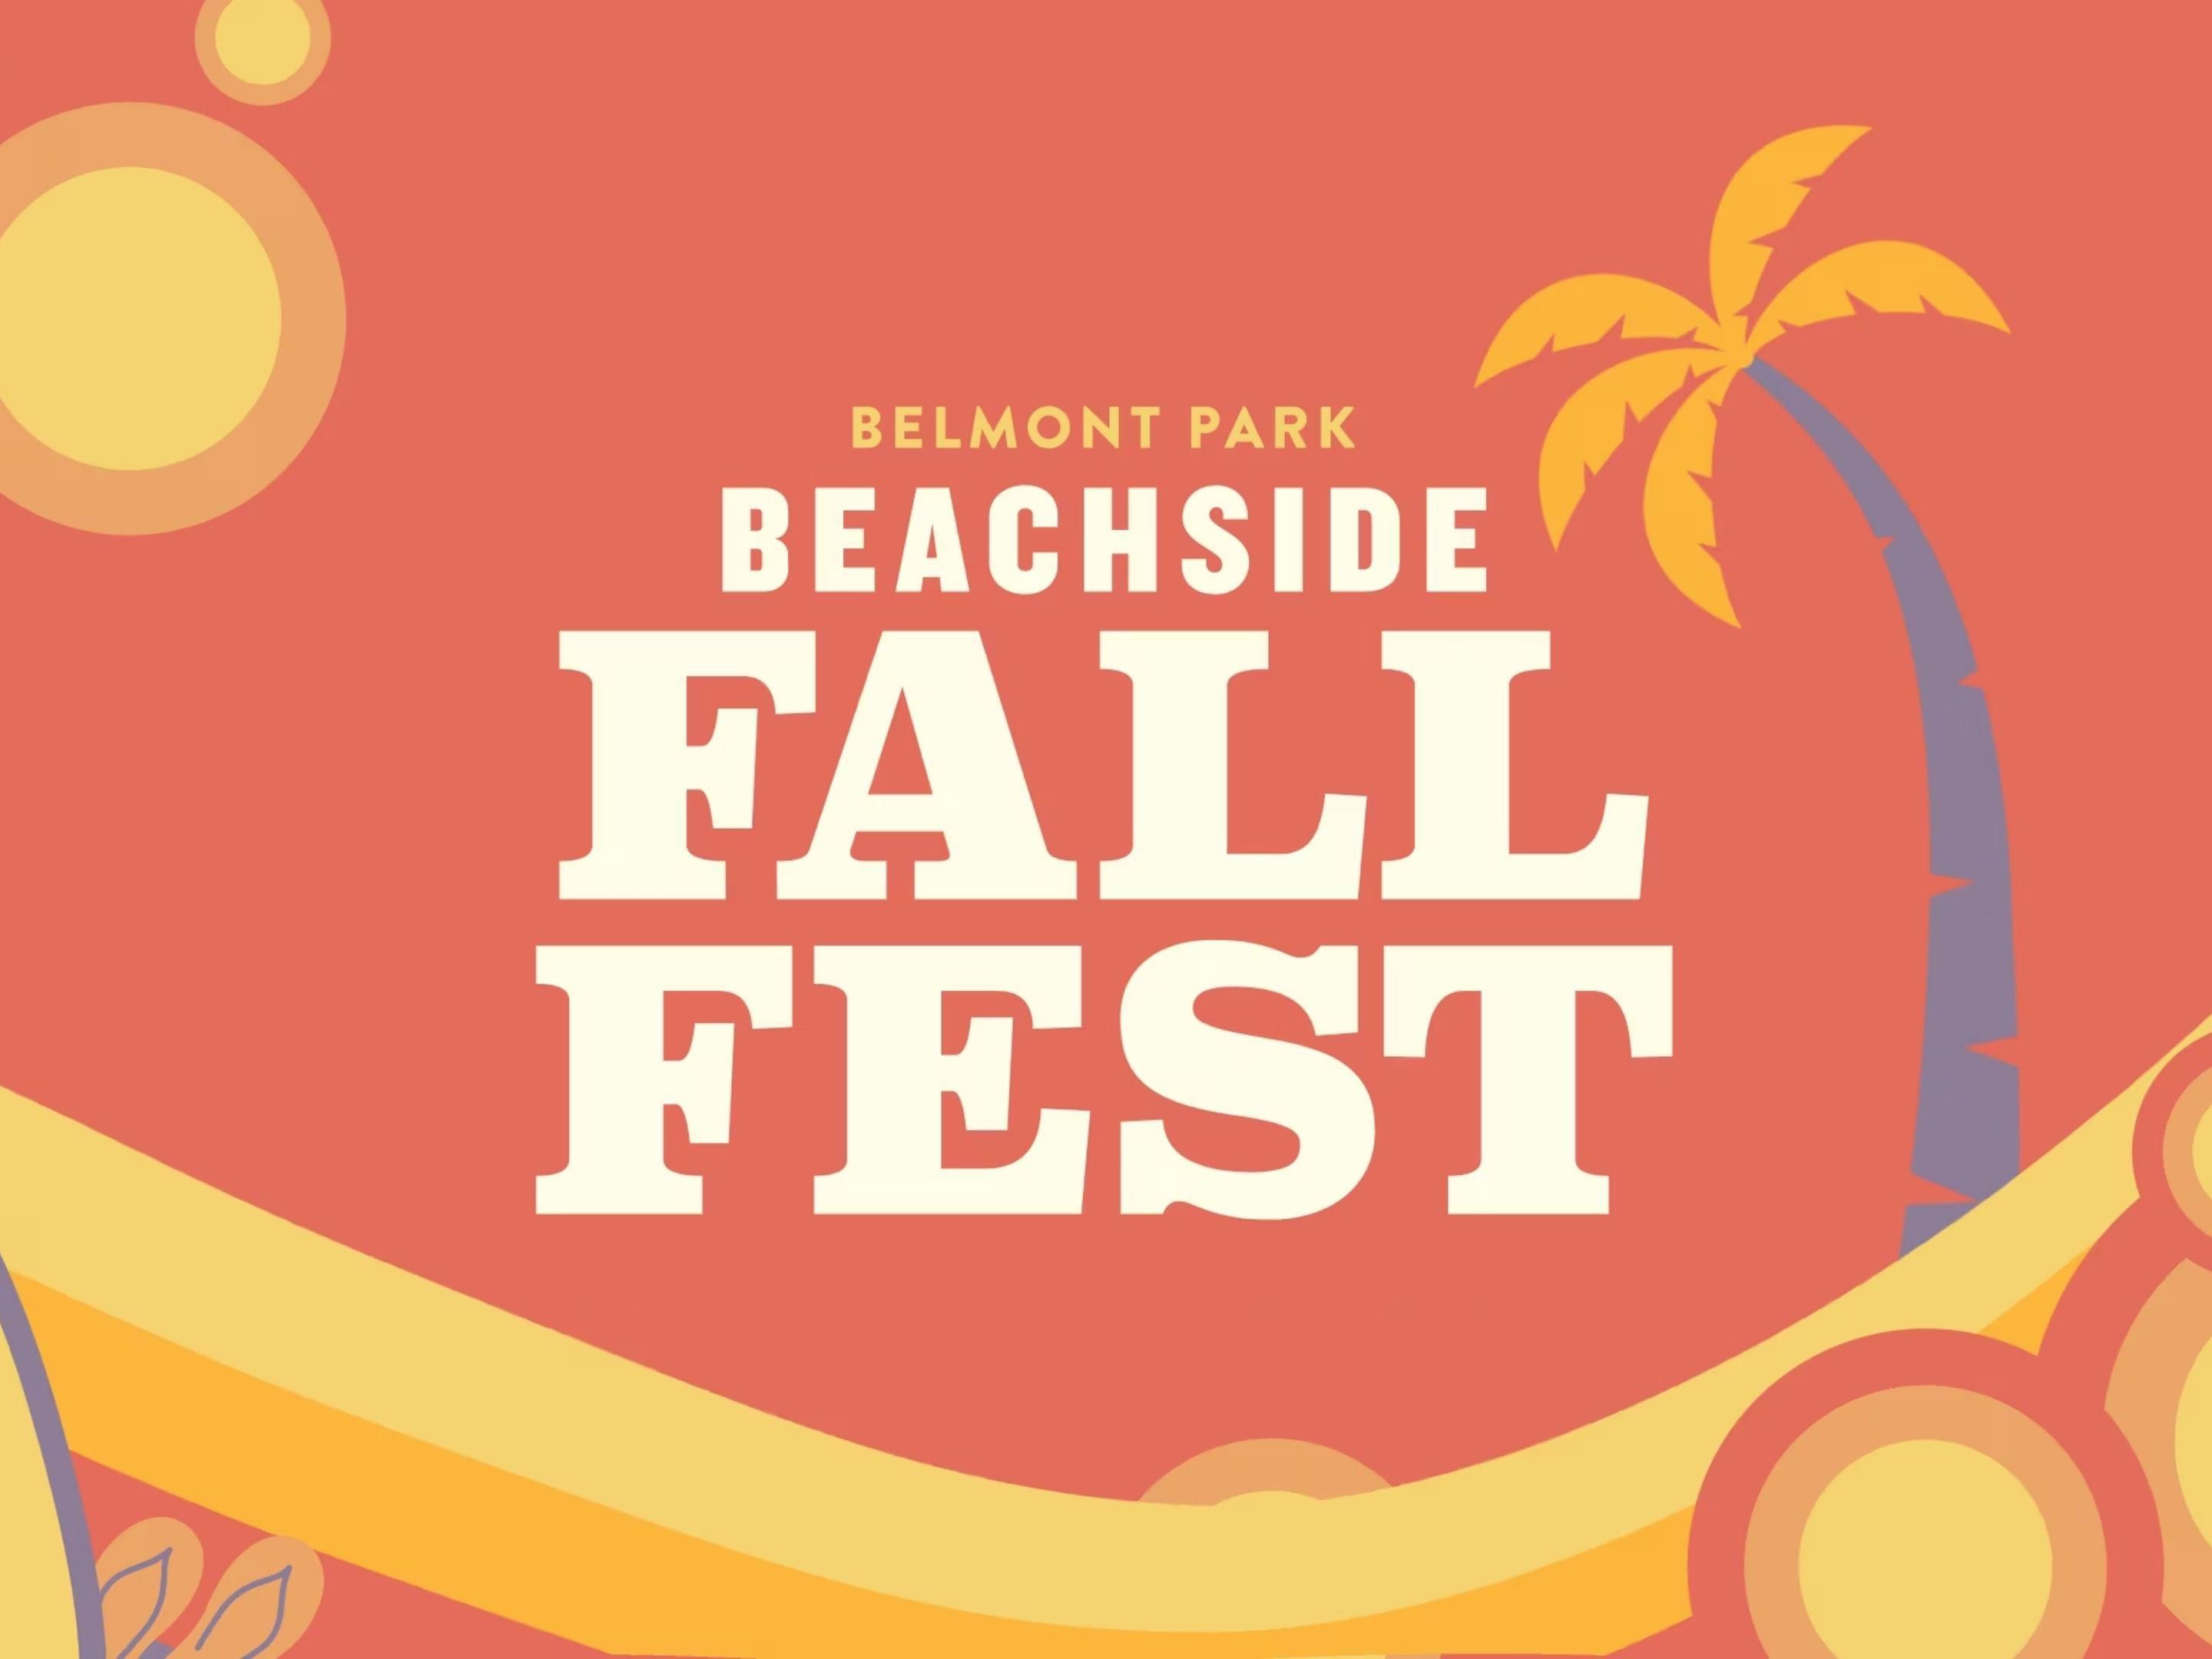 Fall Fest Returns to the Beach